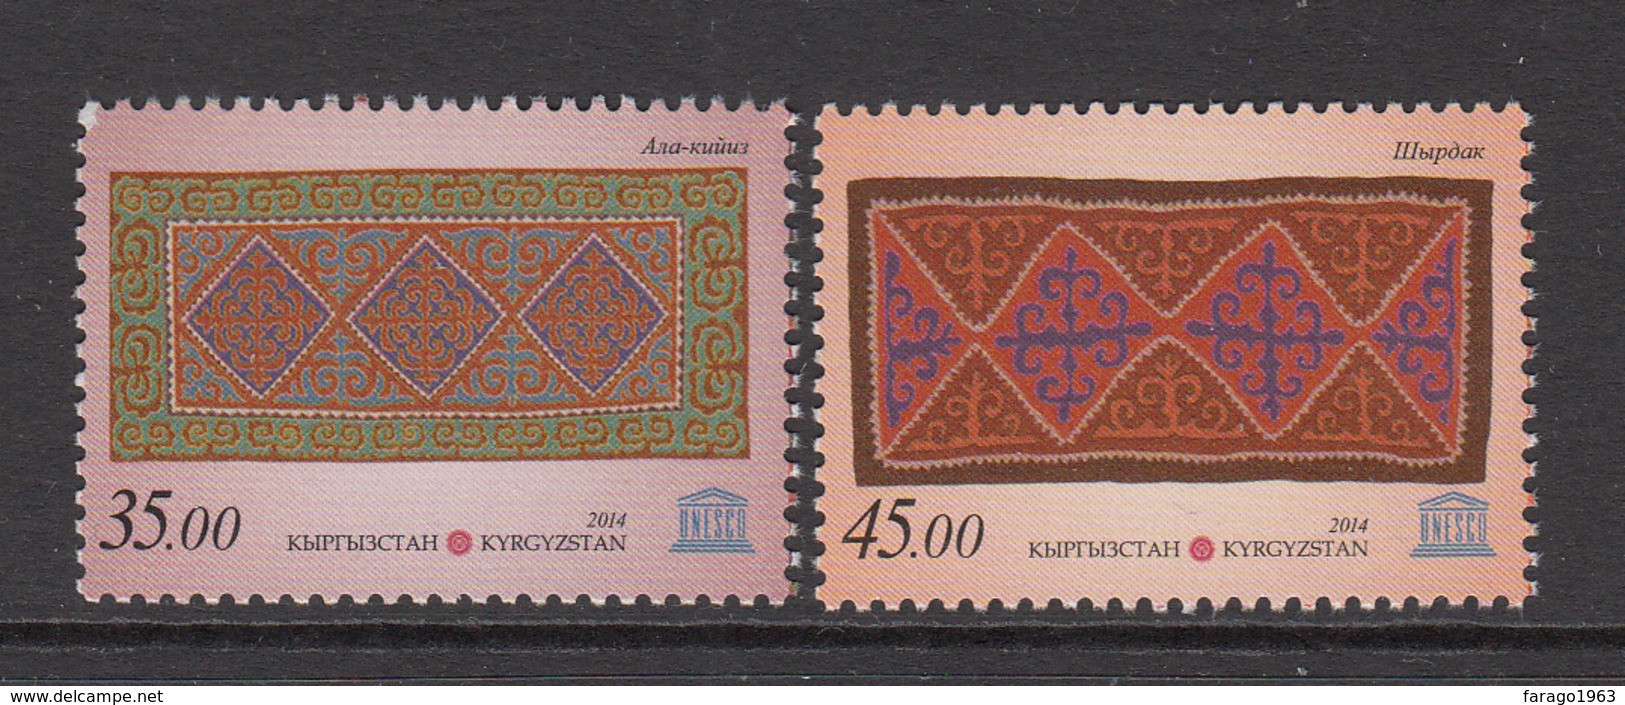 2014 Kyrgyzstan Traditional Carpets Set Of 2 MNH - Kirghizstan